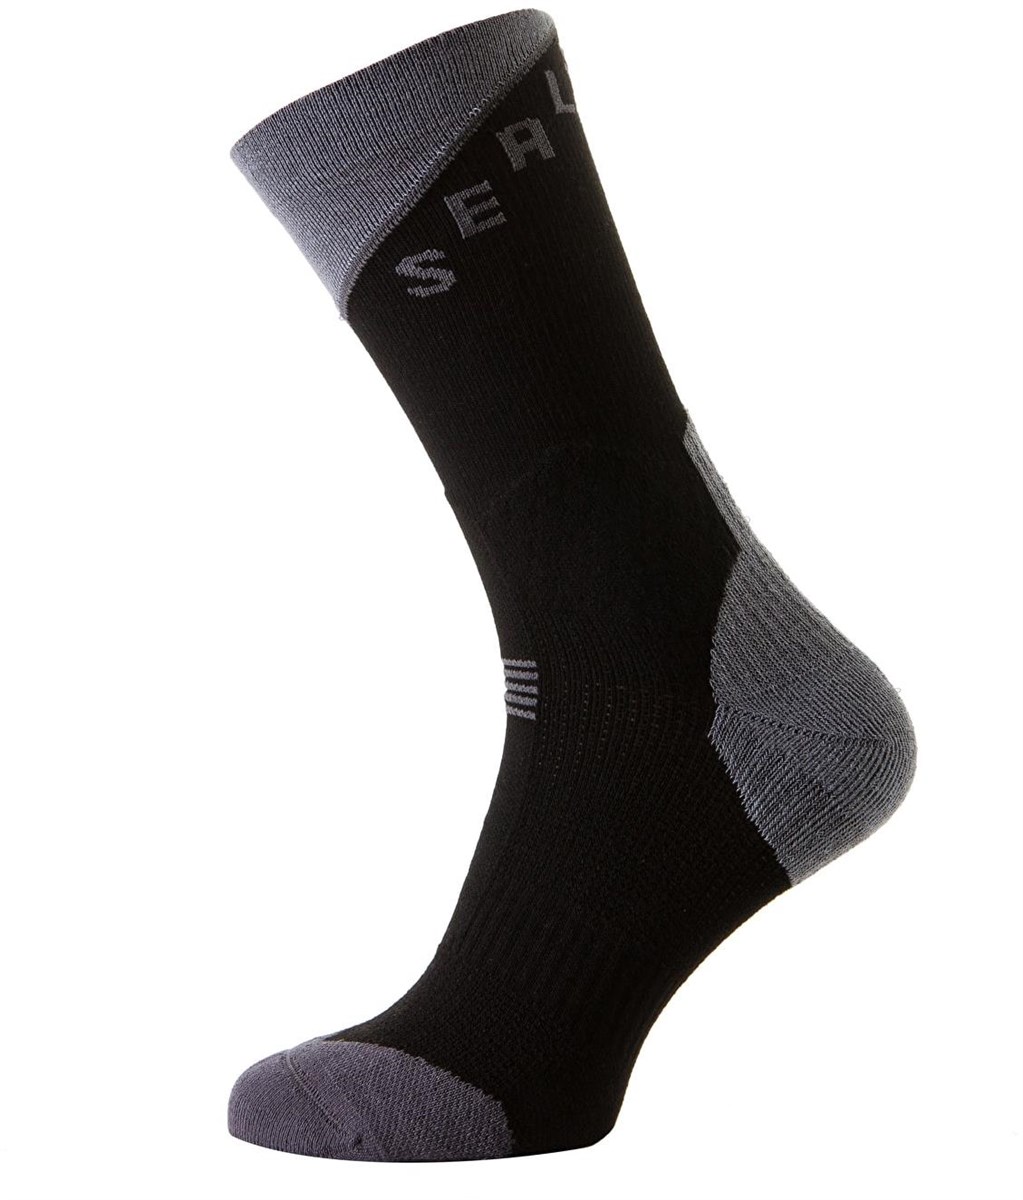 Sealskinz MTB Trail Mid Length Sock product image